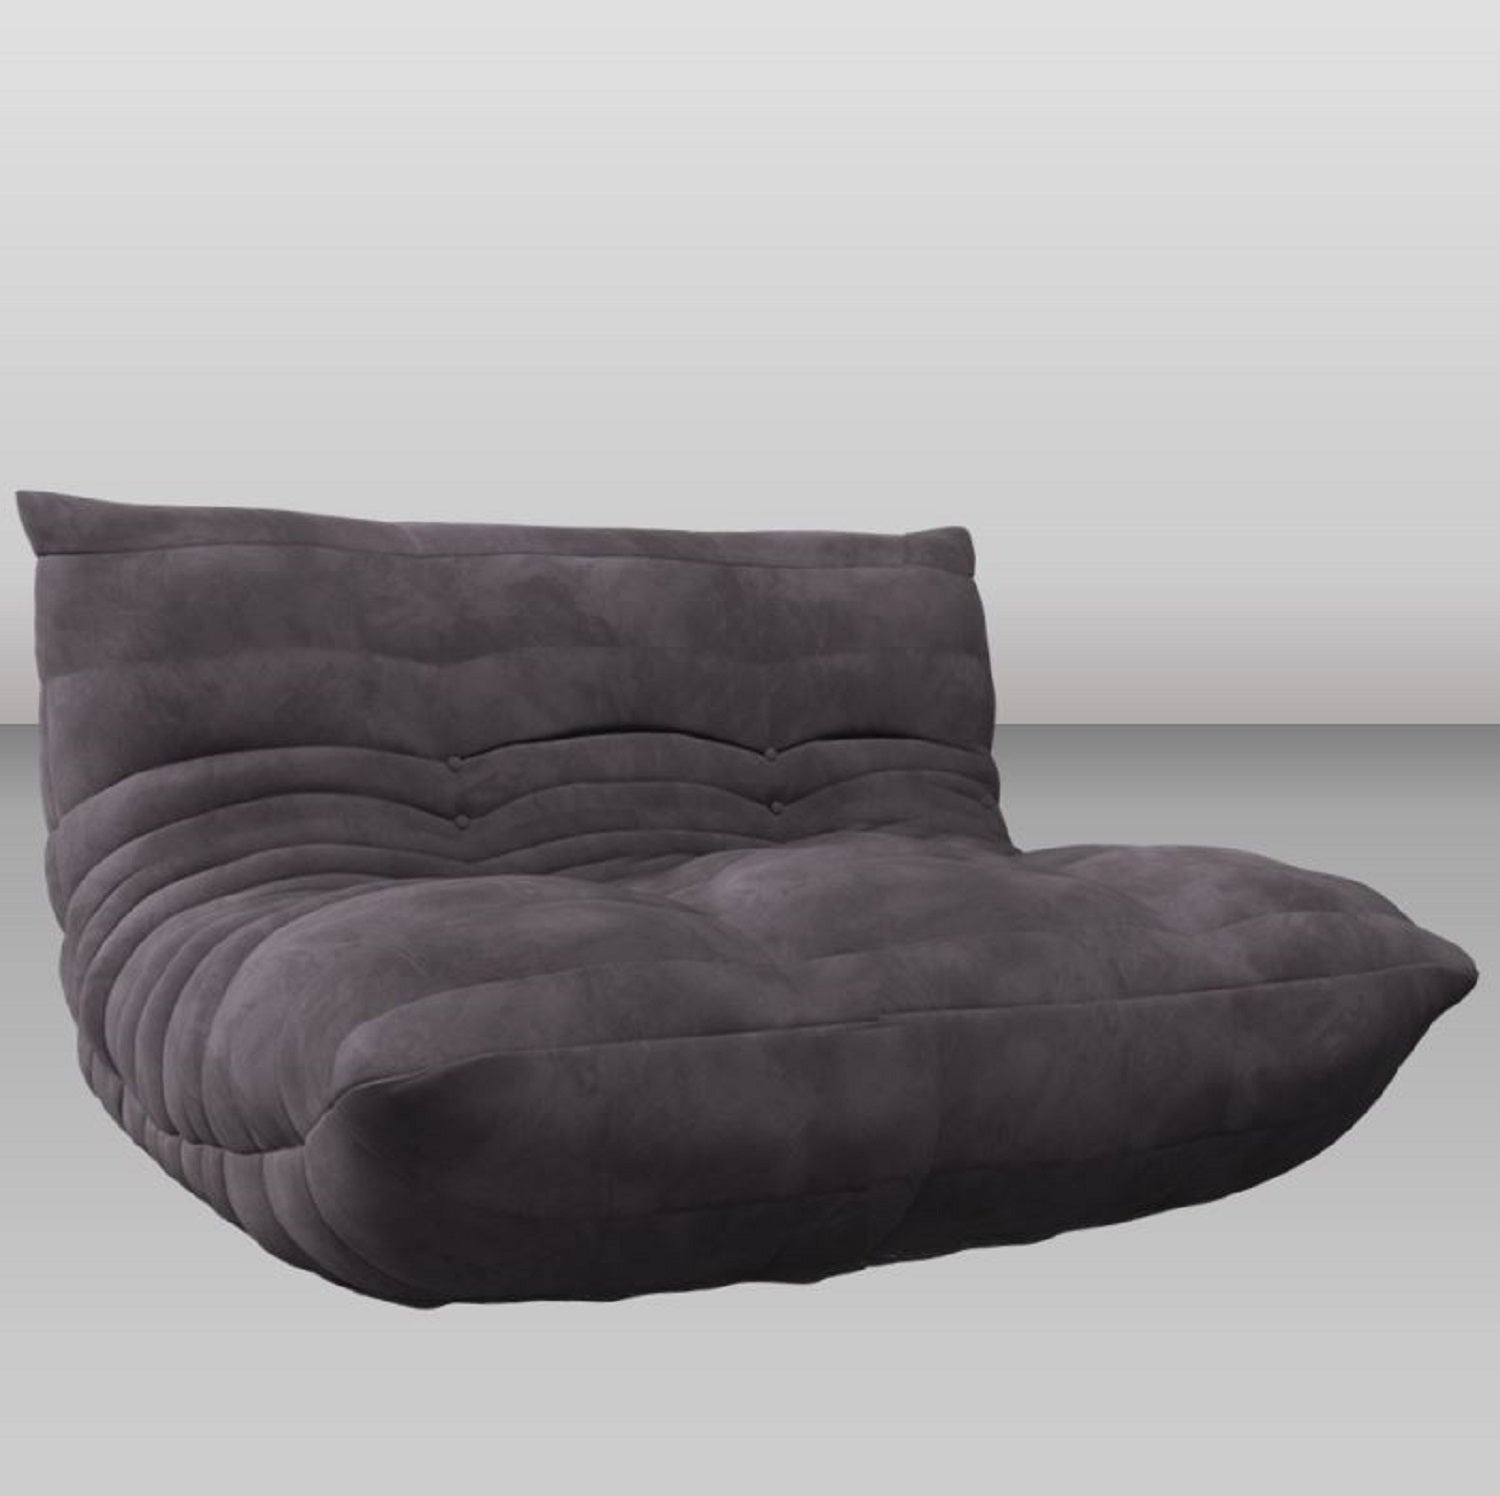 JannahStudios THEODORA contemporary ergonomic quilted luxury living room sofa, Loveseat, Arm Chair and Ottoman (Grey)